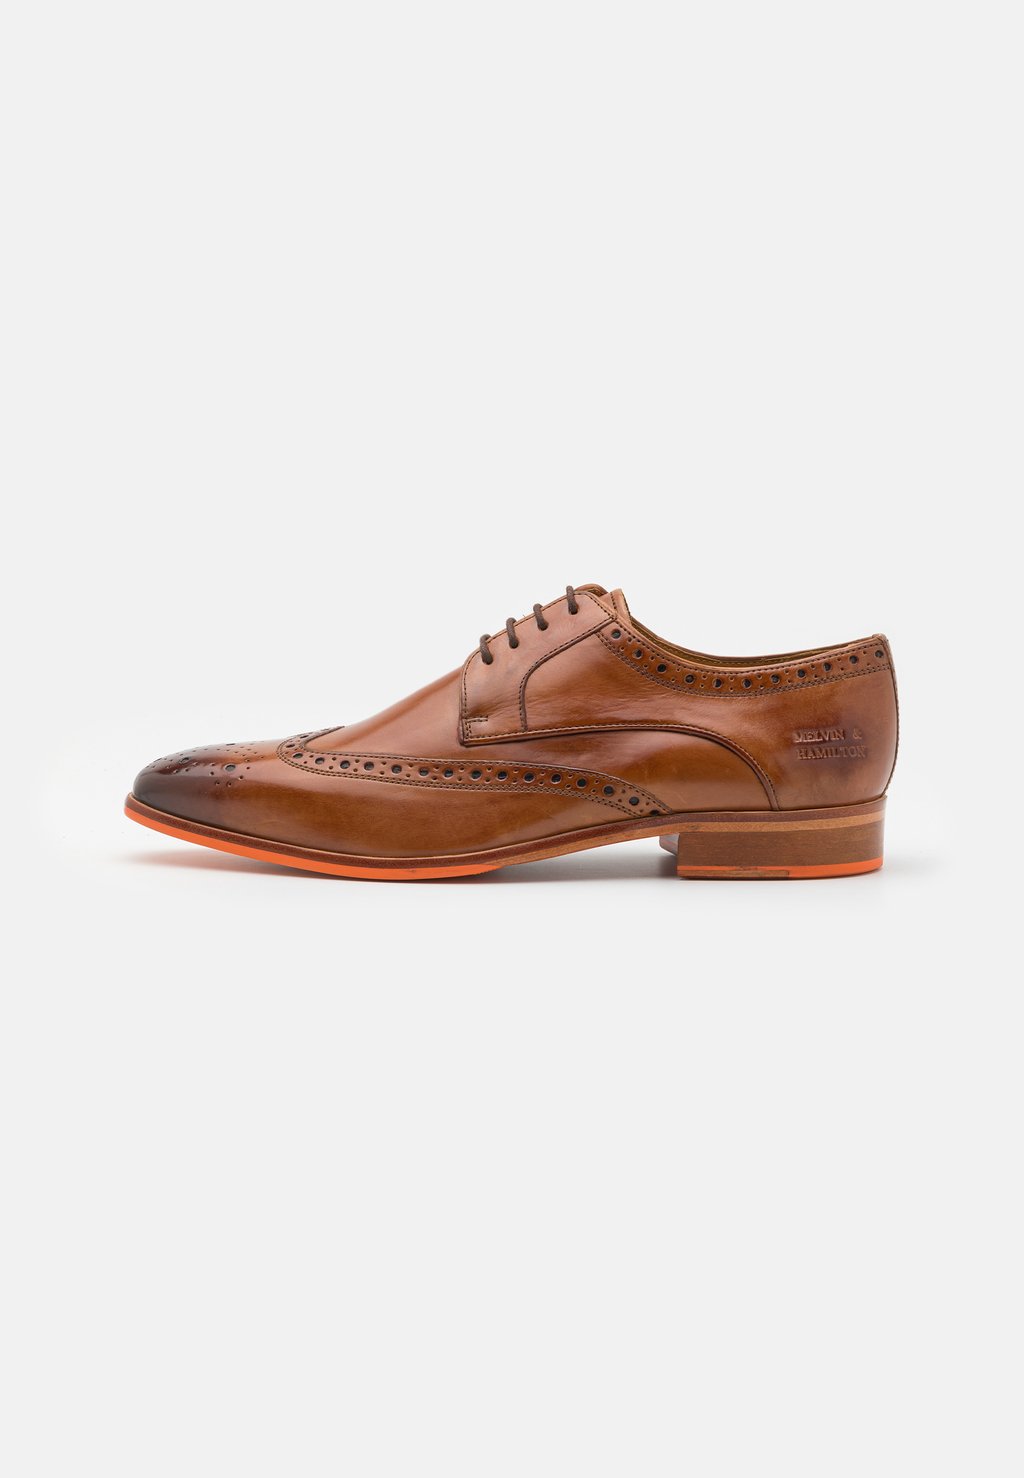 Элегантные туфли на шнуровке Lewis 3 Melvin & Hamilton, цвет tan/orange